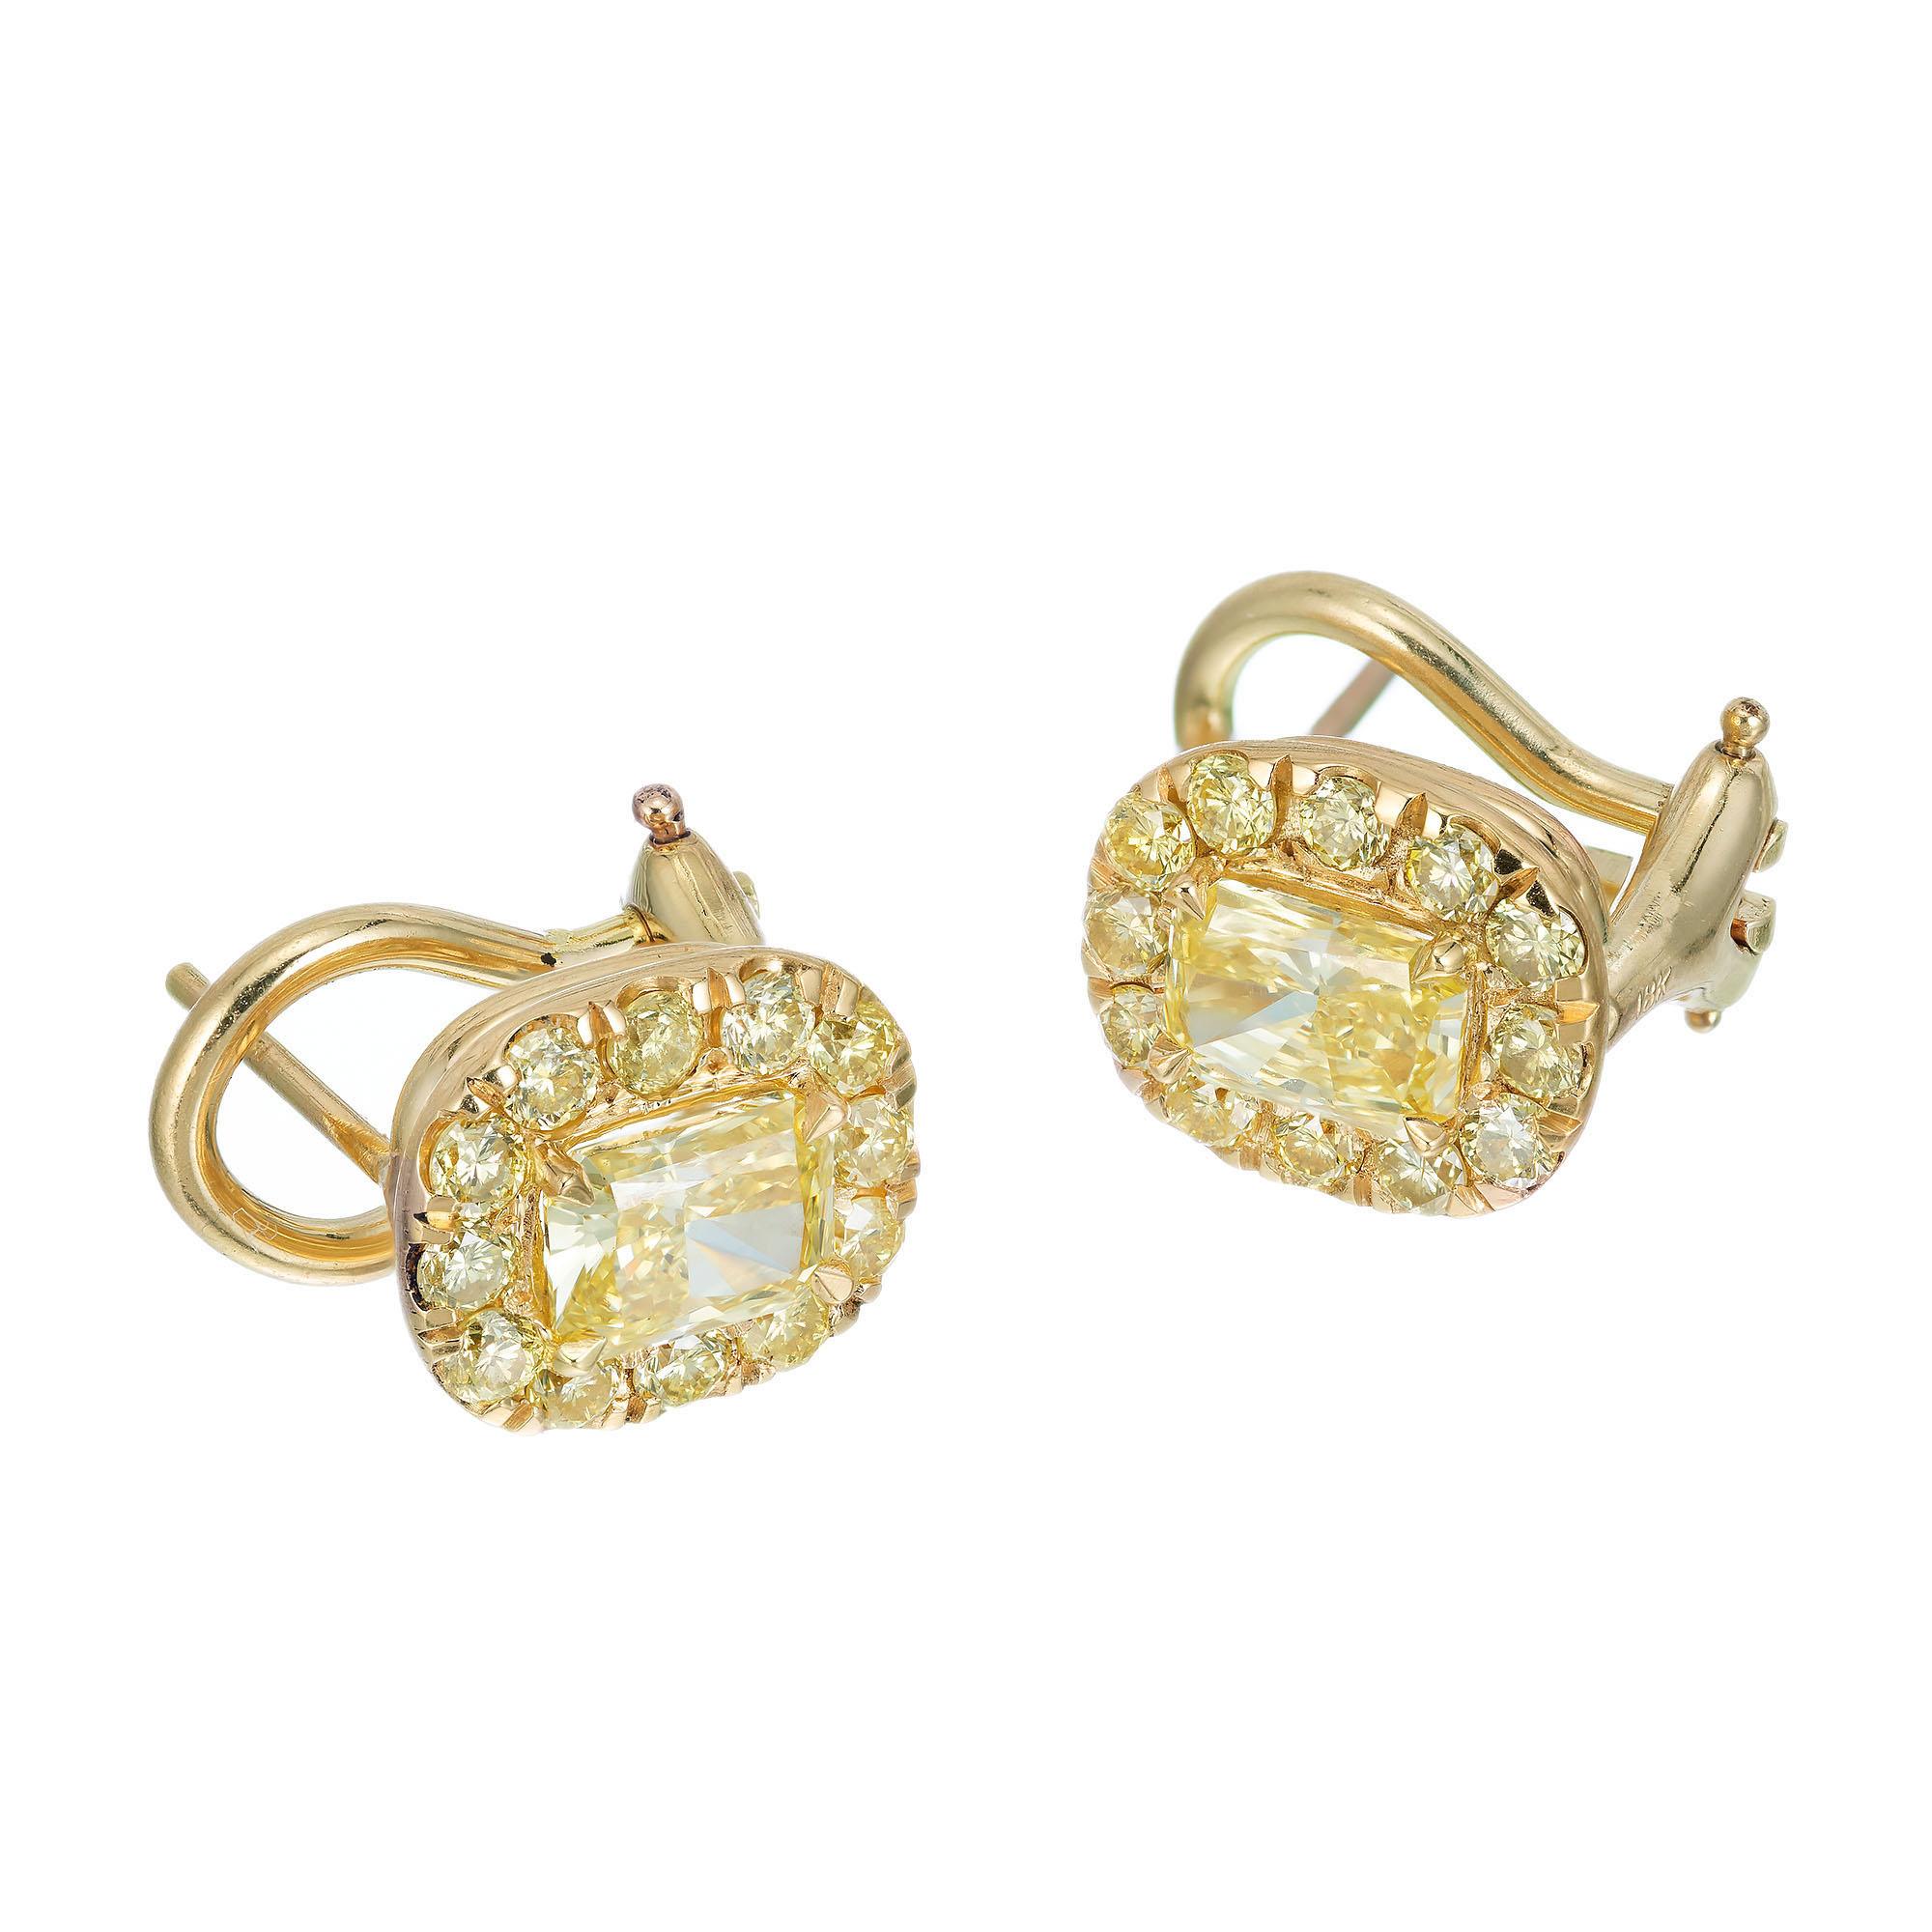 Round Cut Peter Suchy GIA 1.19 Carat Certified Yellow Diamond Yellow Gold Earrings